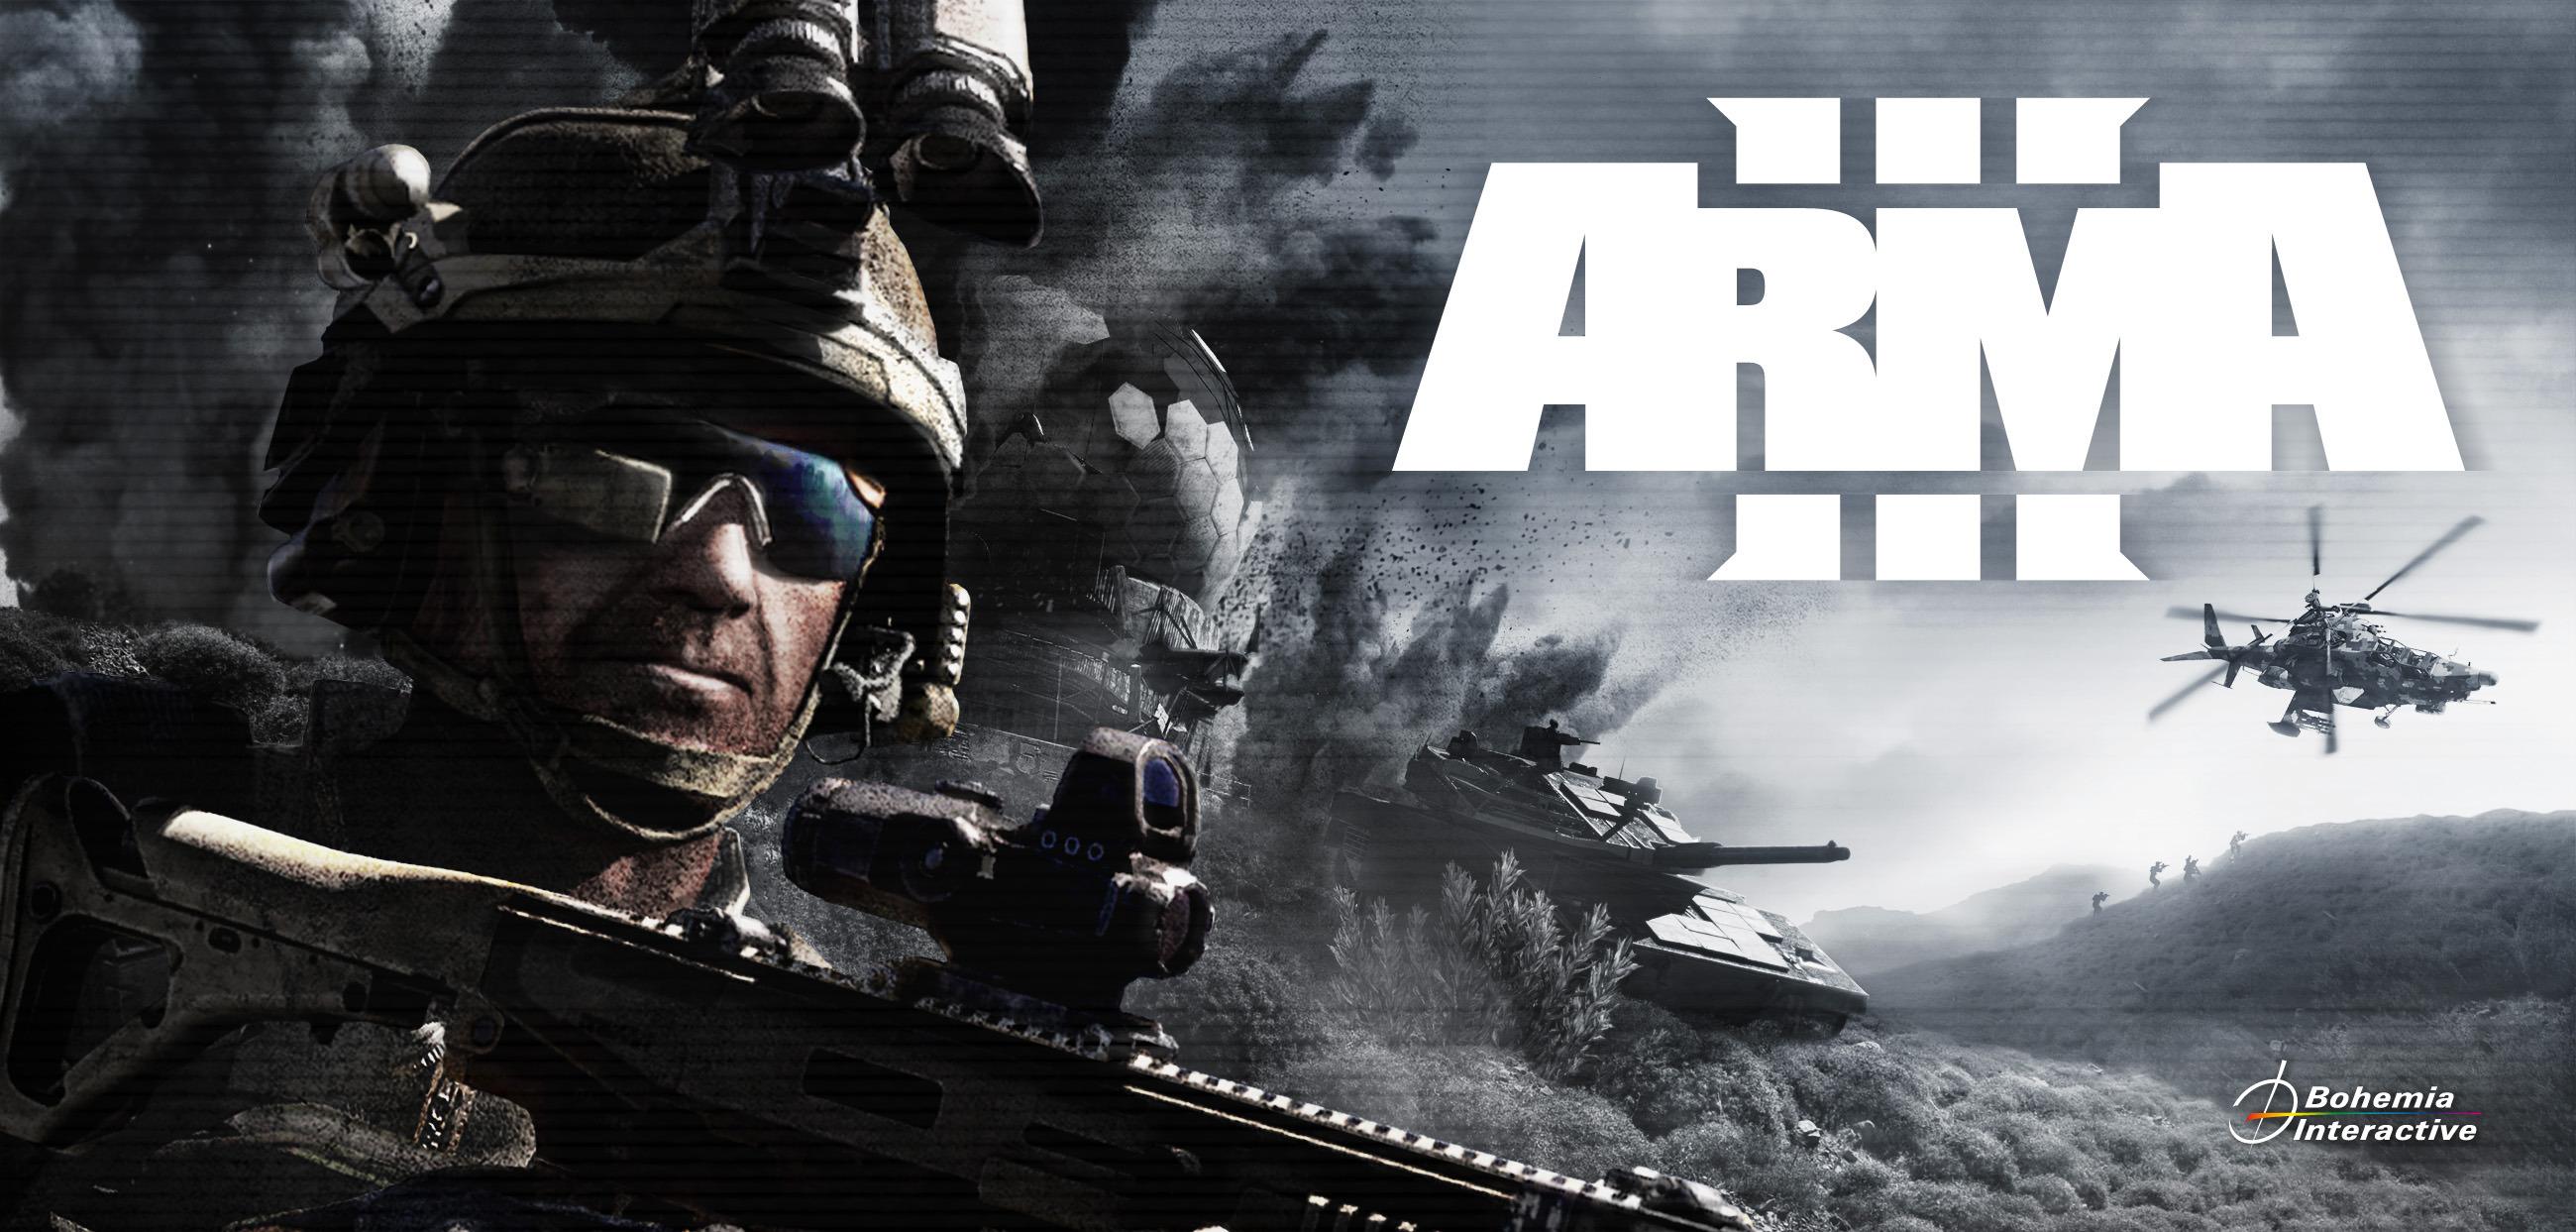 ARMA III: Morrowind وهي من أفضل ألعاب الكمبيوتر